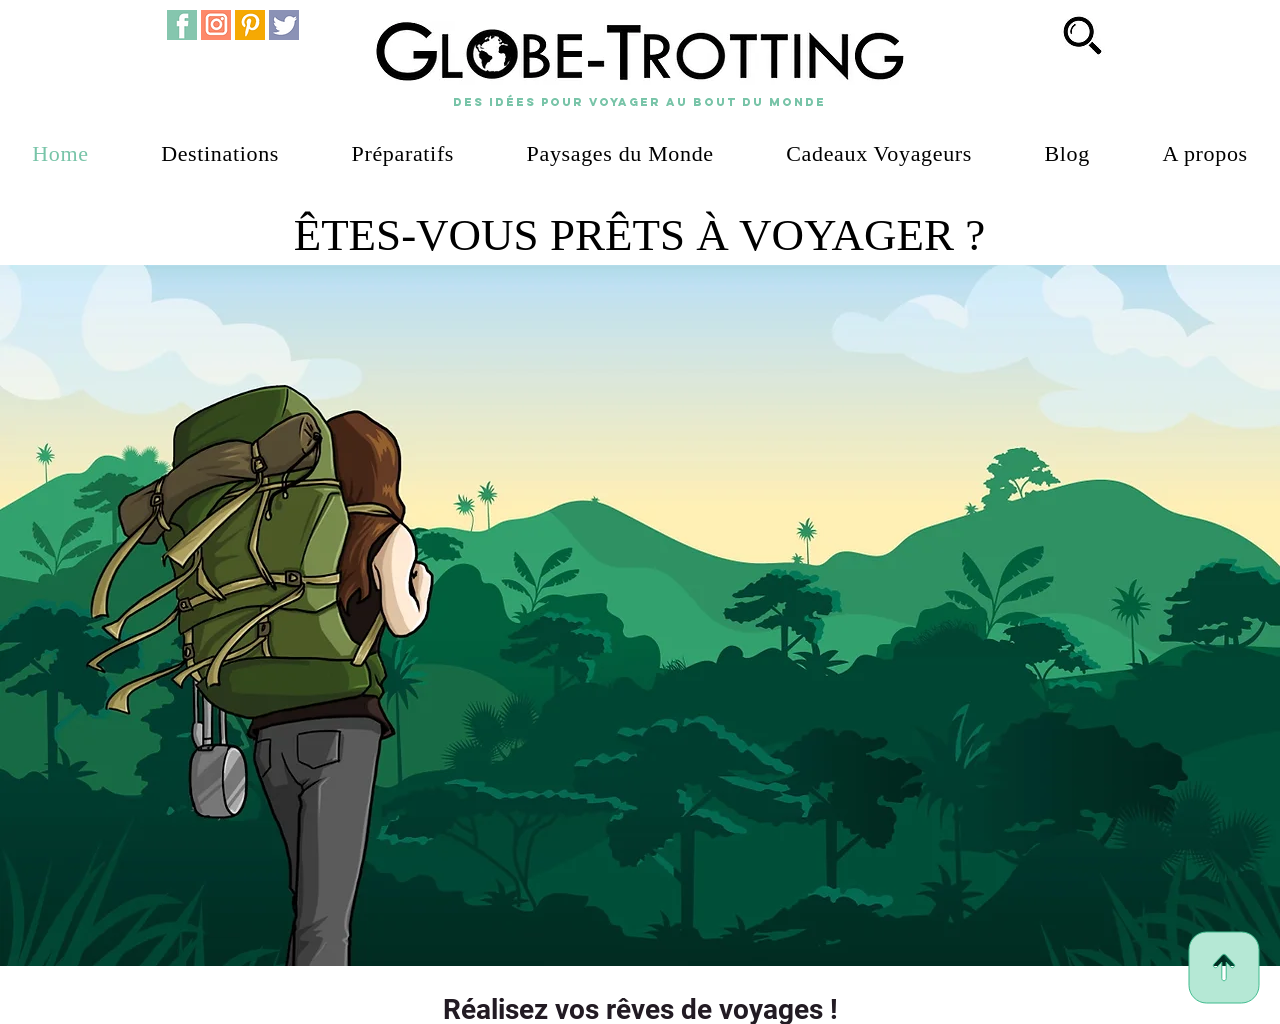 www.globe-trotting.com